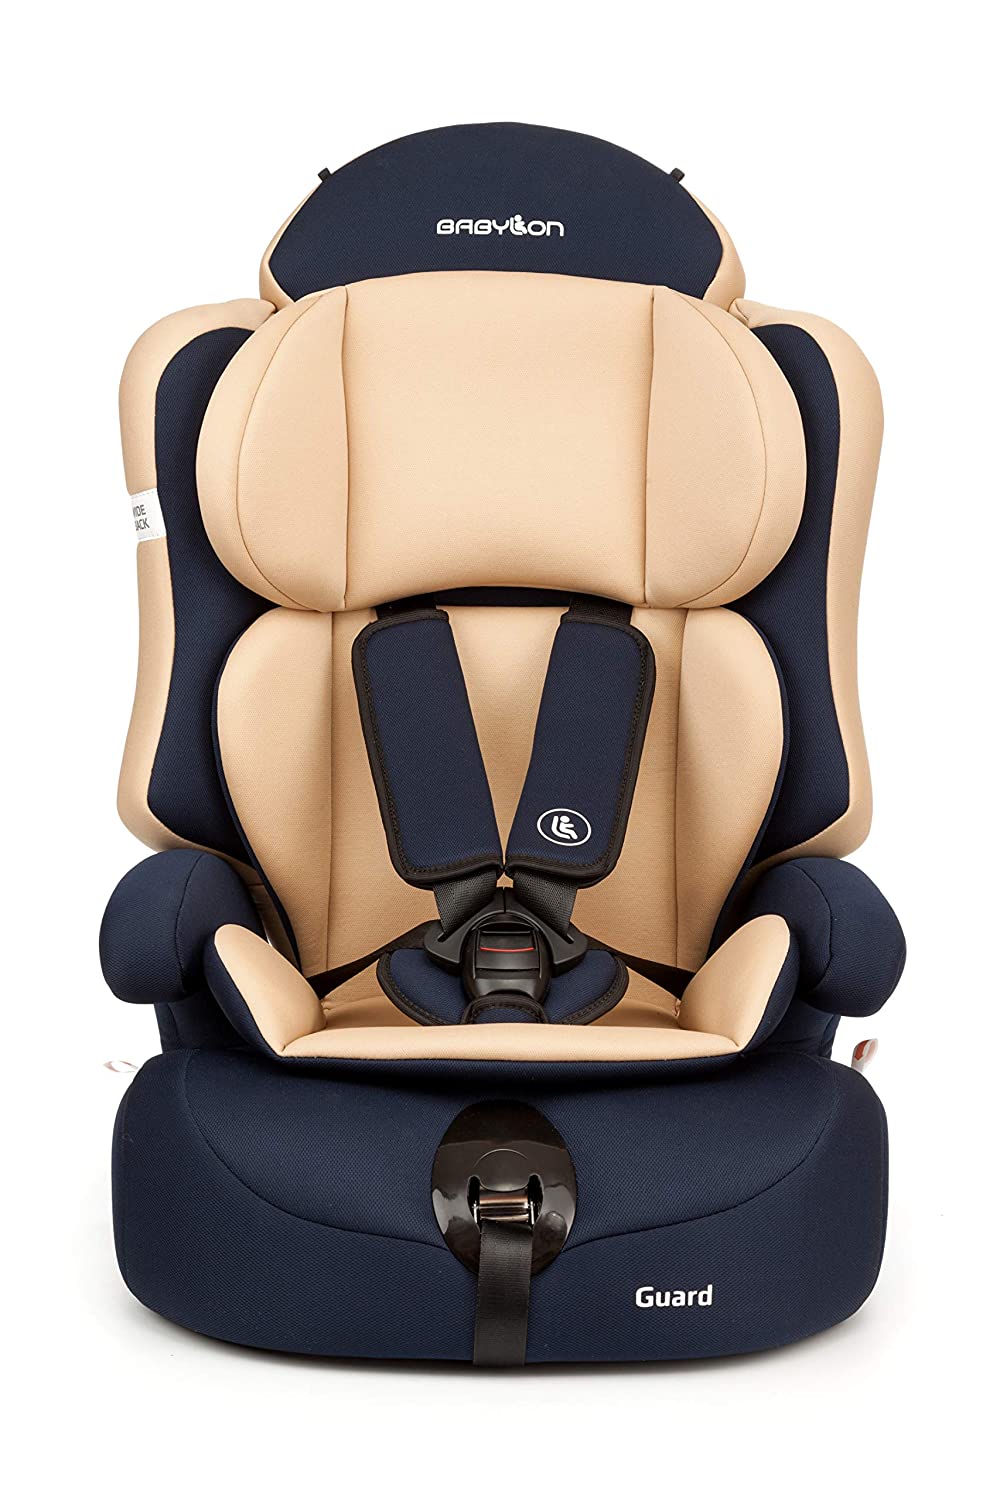 Babylon Guard Child Car Seat Group 1/2/3, 9-36 kg Child Seat with Top Tether 5 Point Seat Belt Car Seat Adjustable Headrest ECE R44/04 Beige